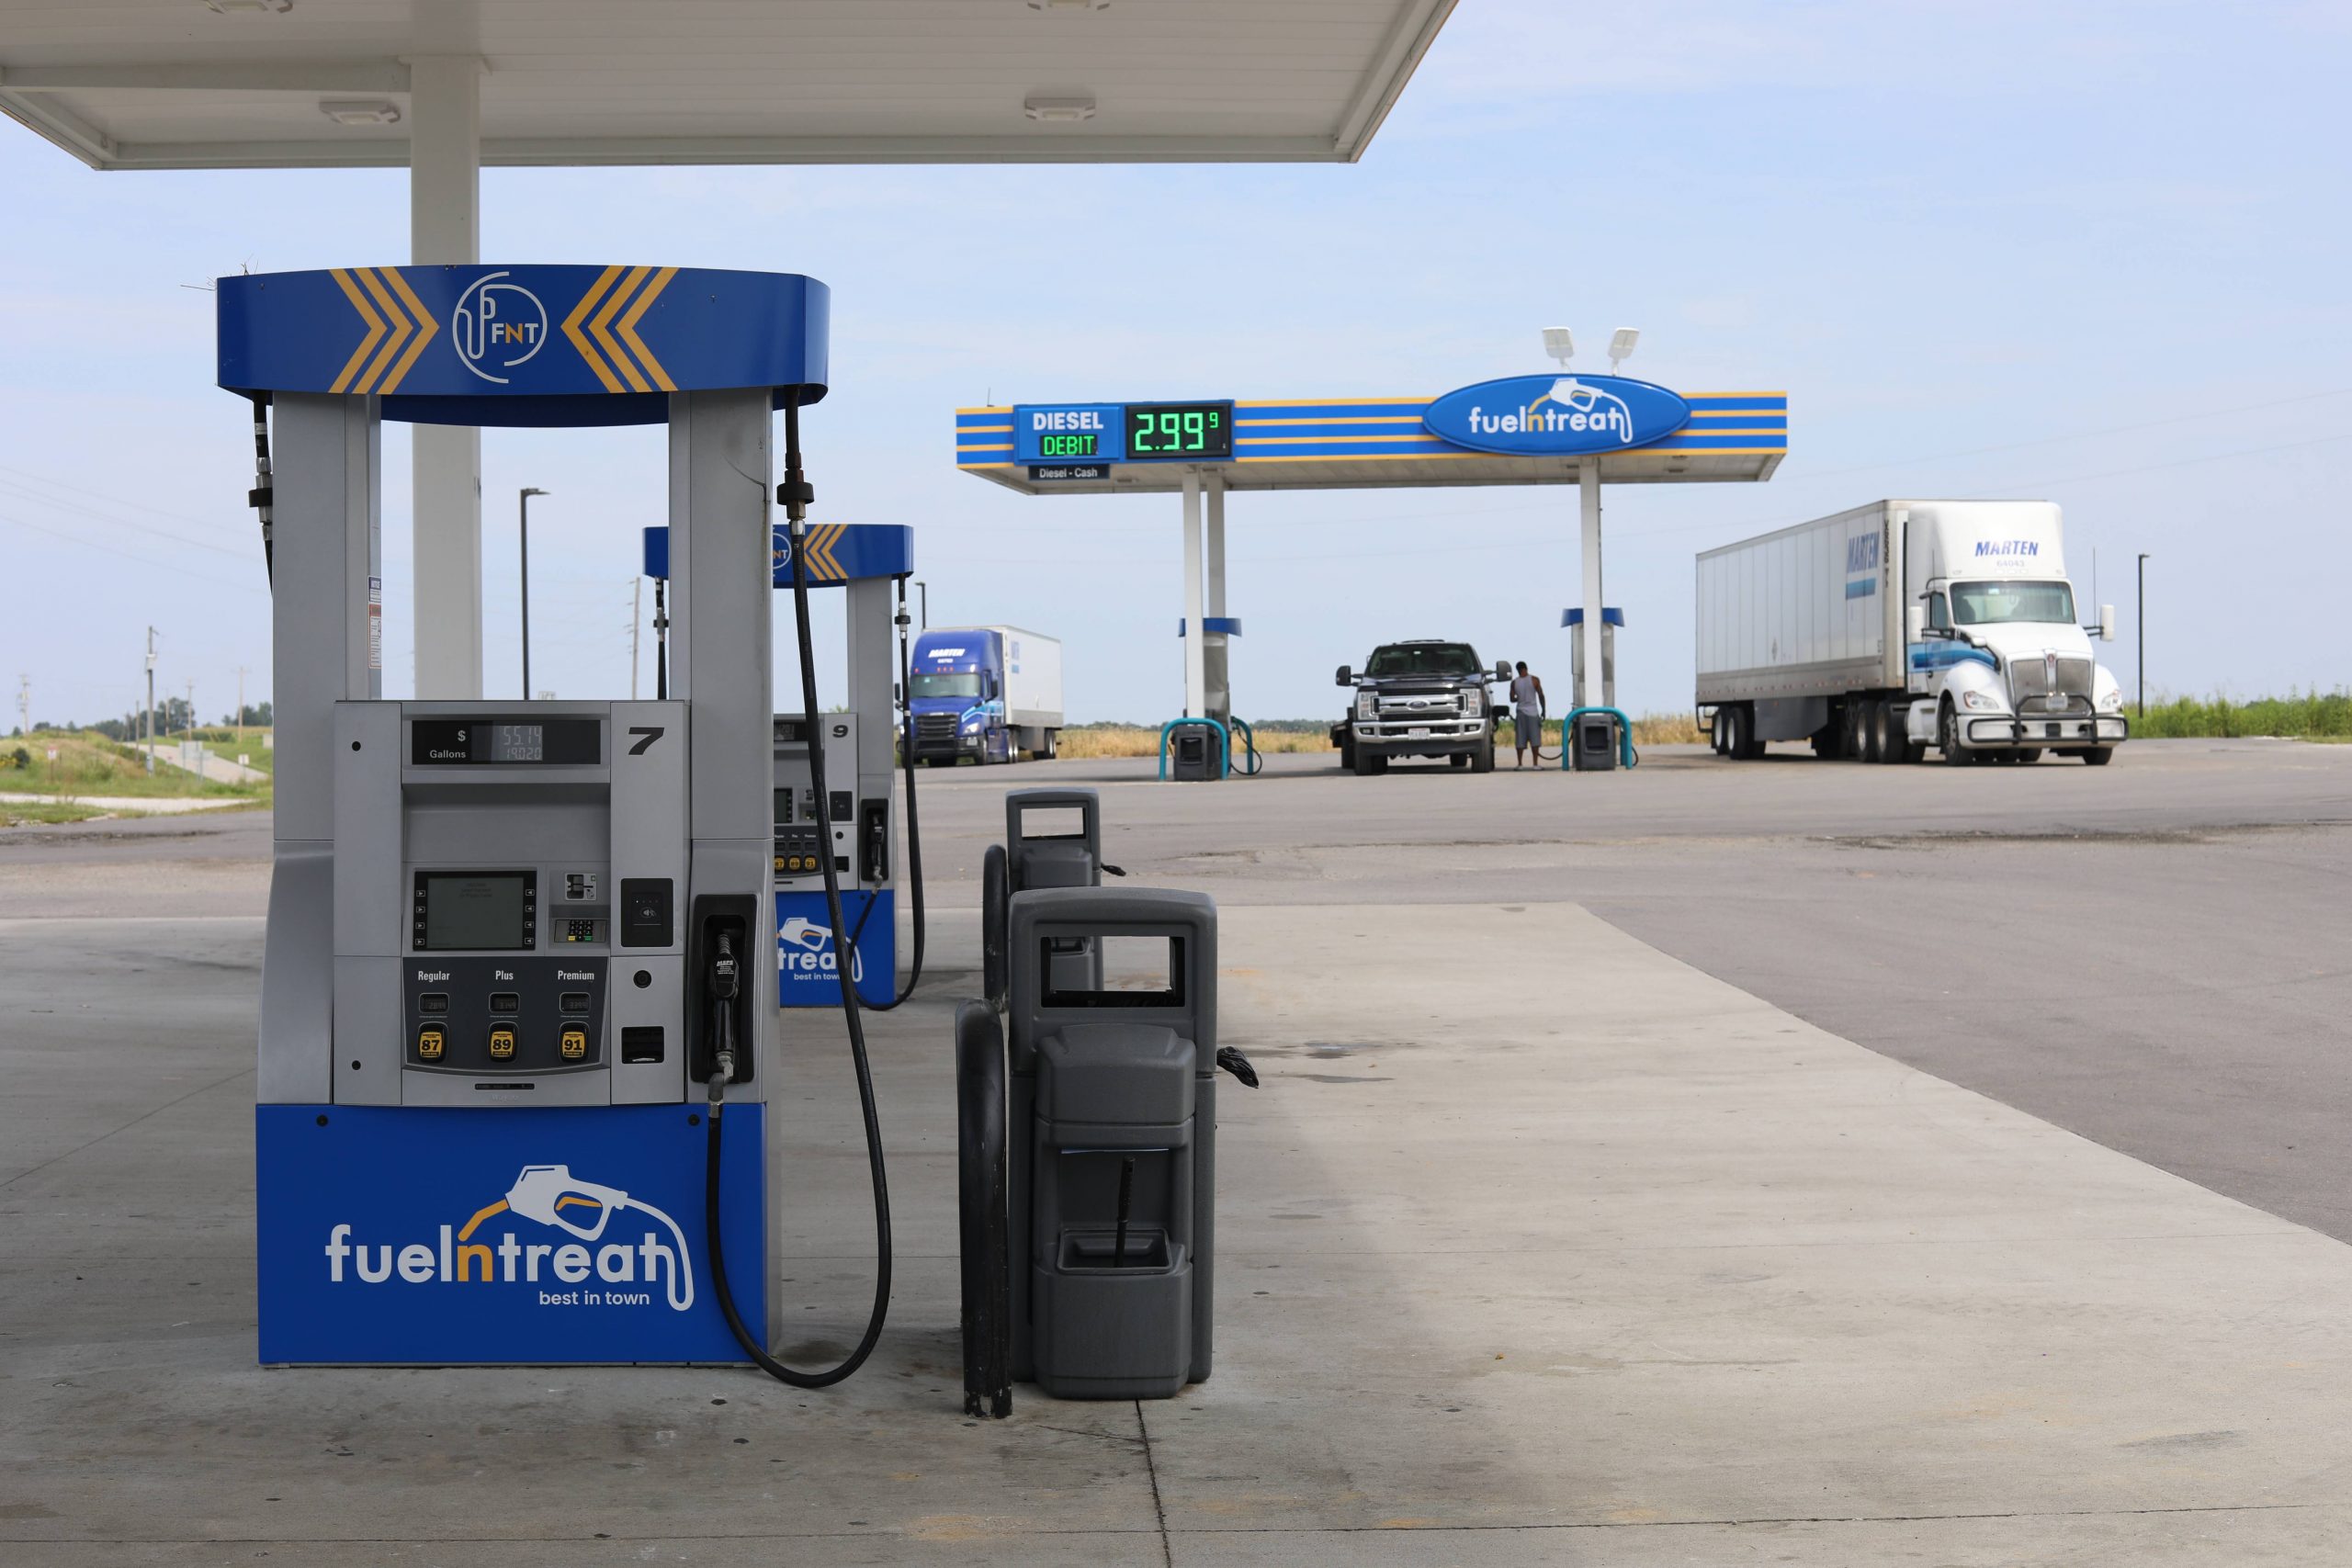 FuelnTreat gas filling station